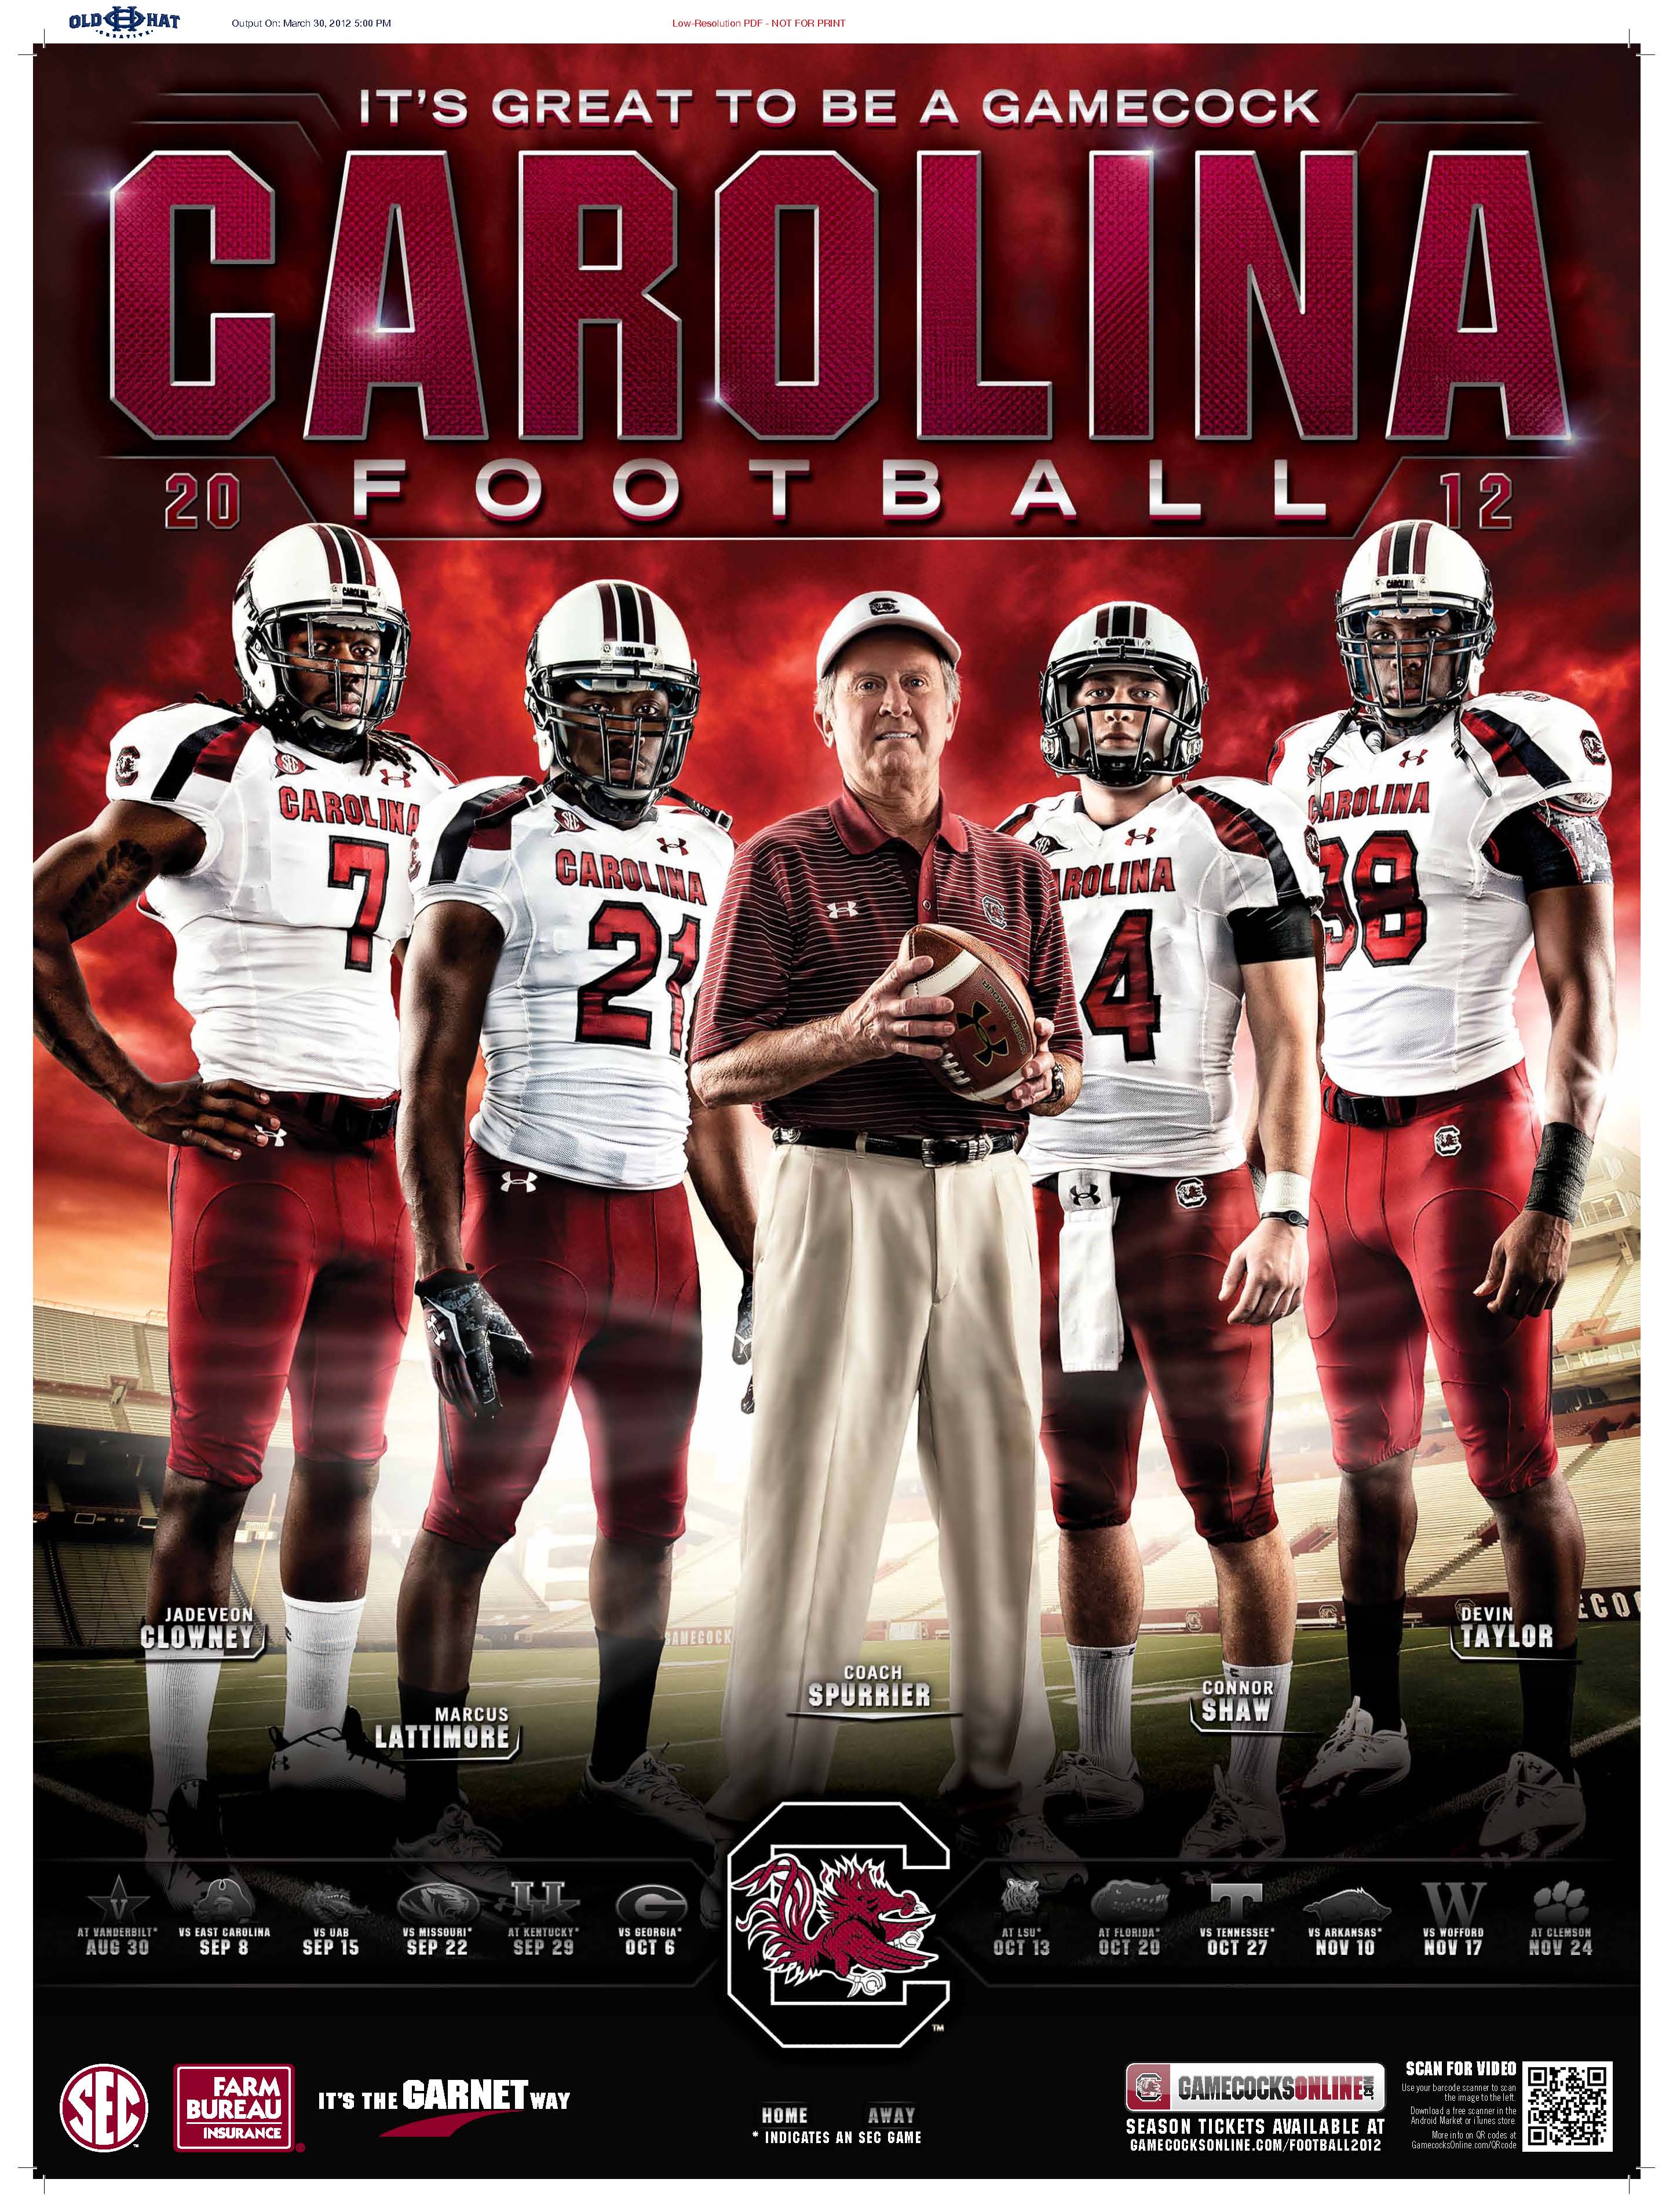  Glimpse of 2012 Gamecock Football Poster   South Carolina Gamecocks